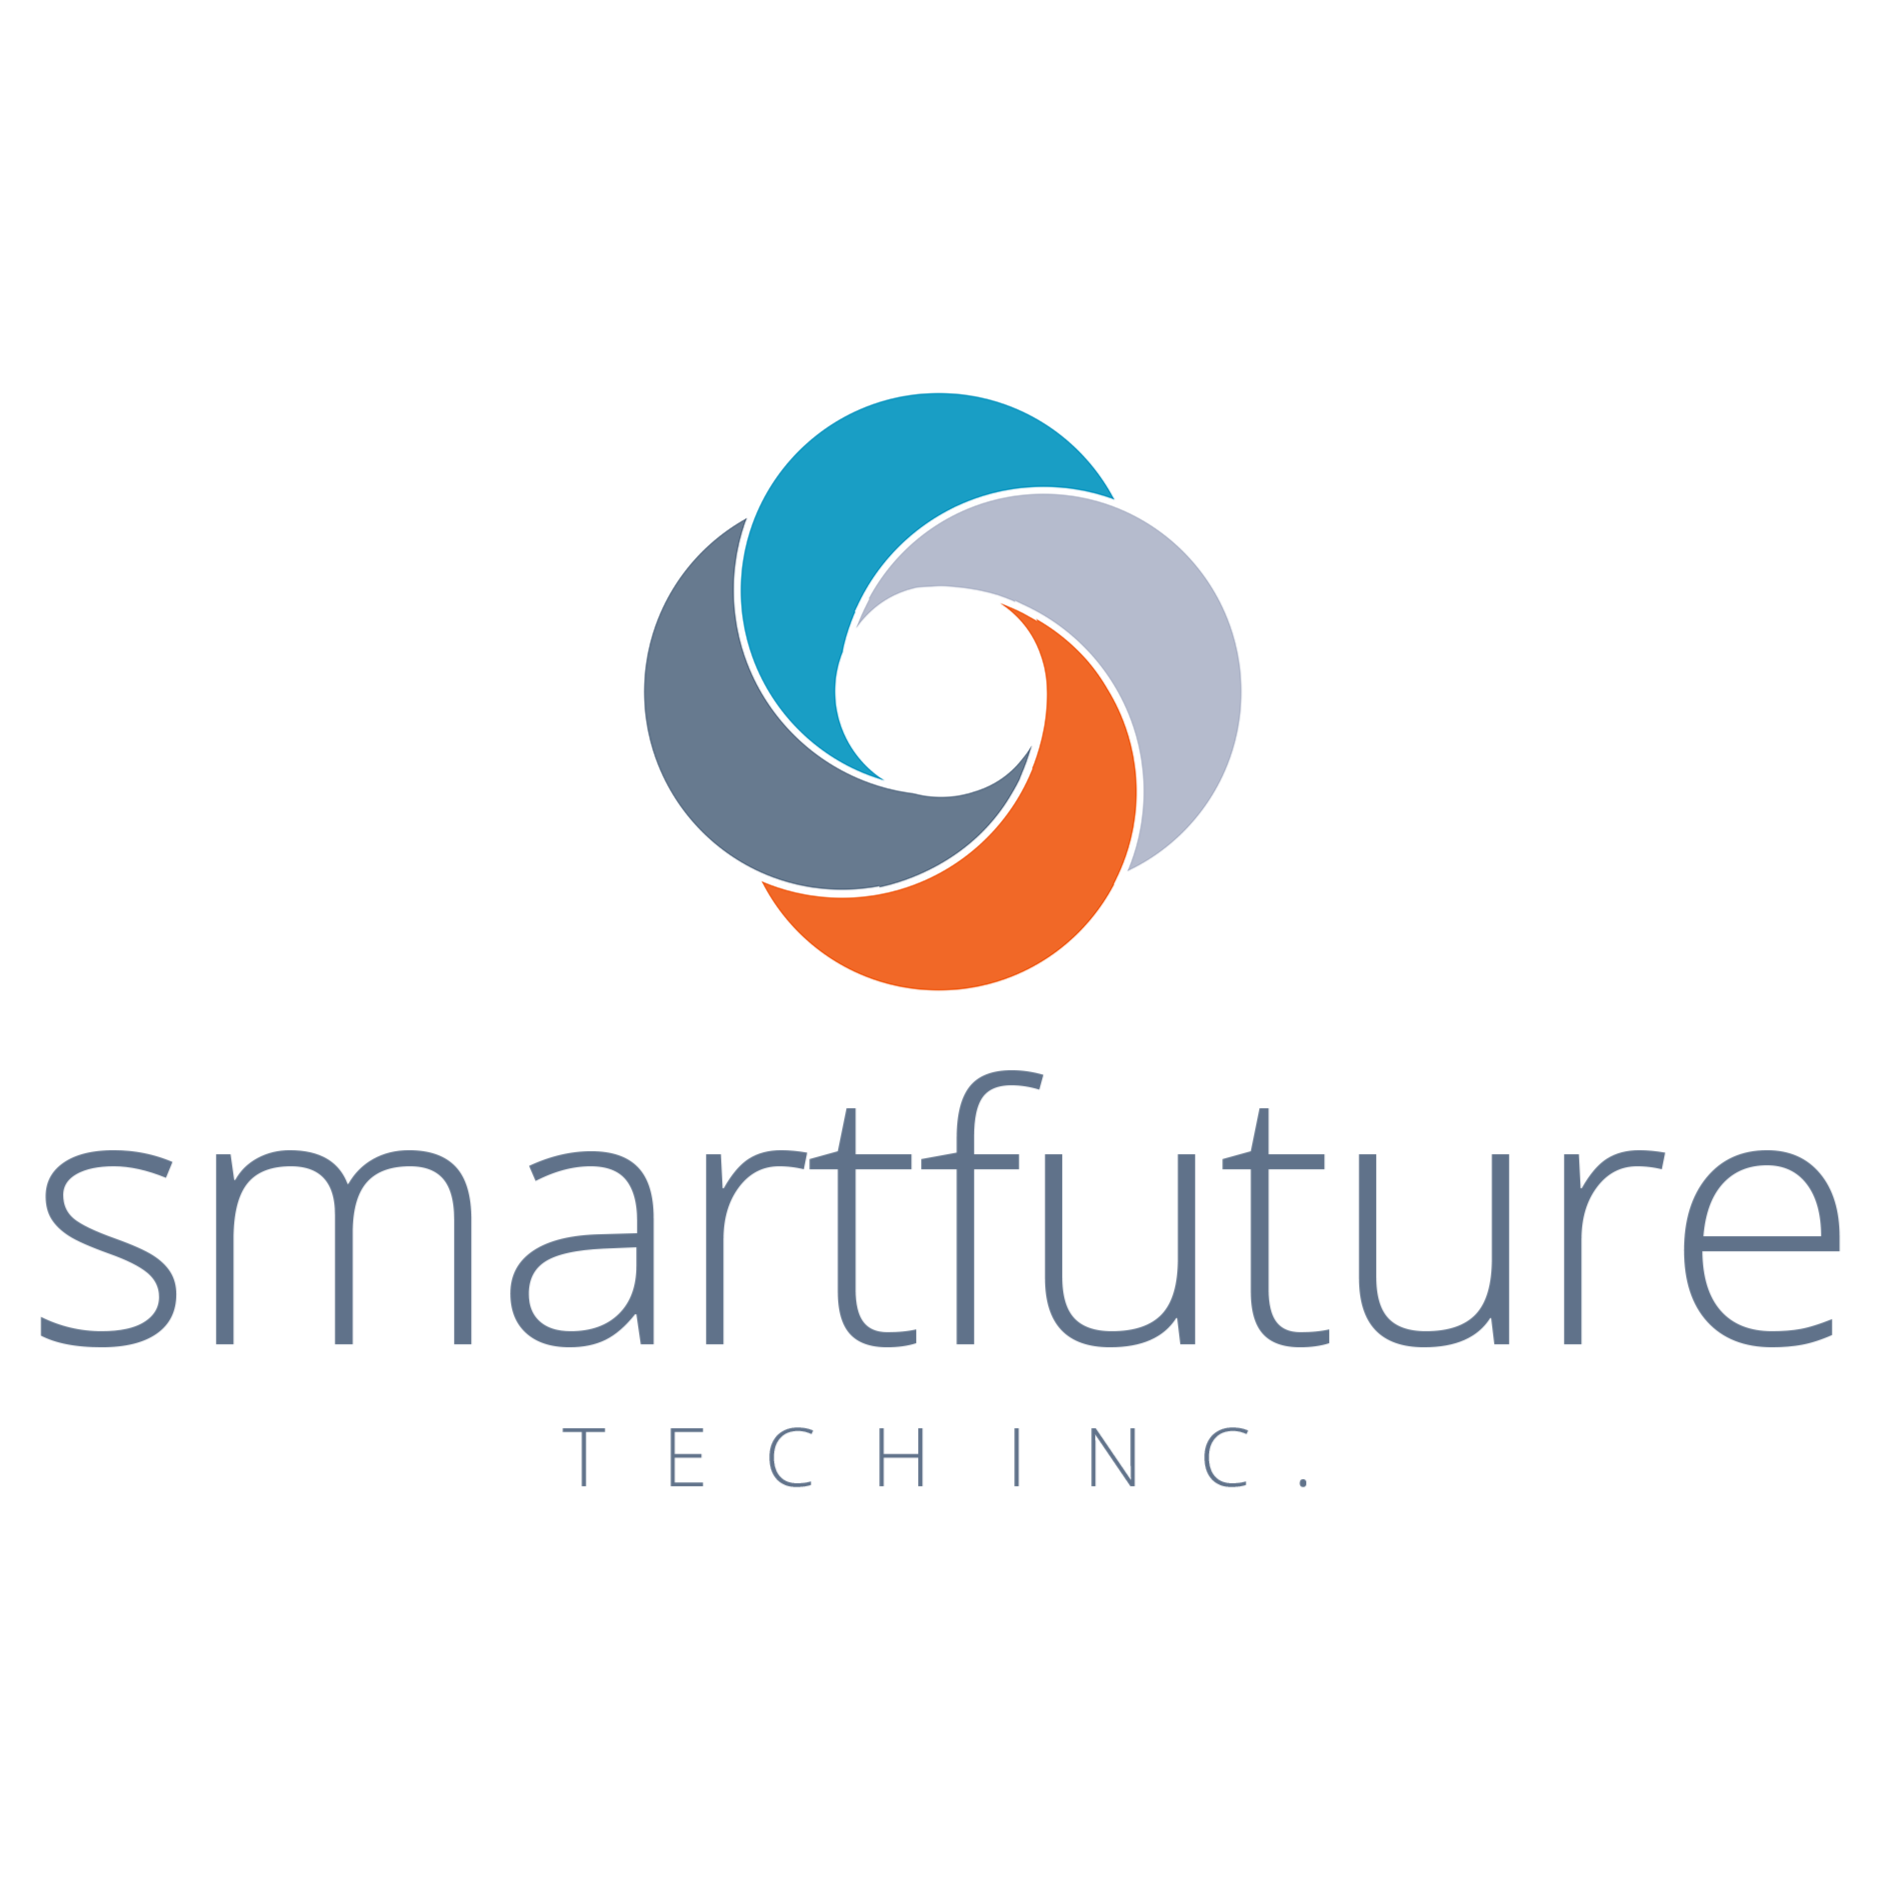 Working at Smartfuture Tech Inc. | Bossjob